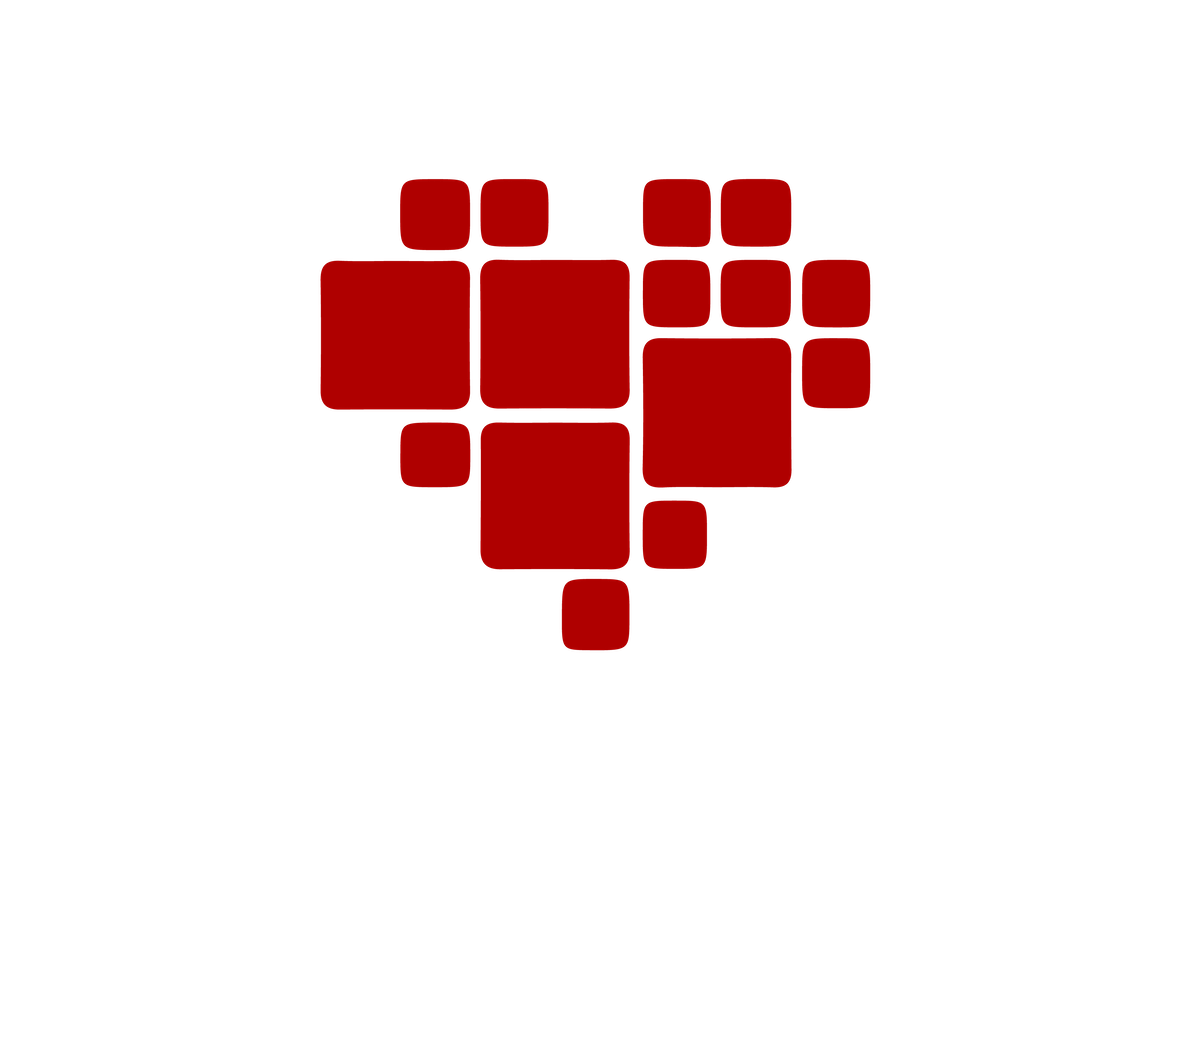 Microsoft Wellness Systems